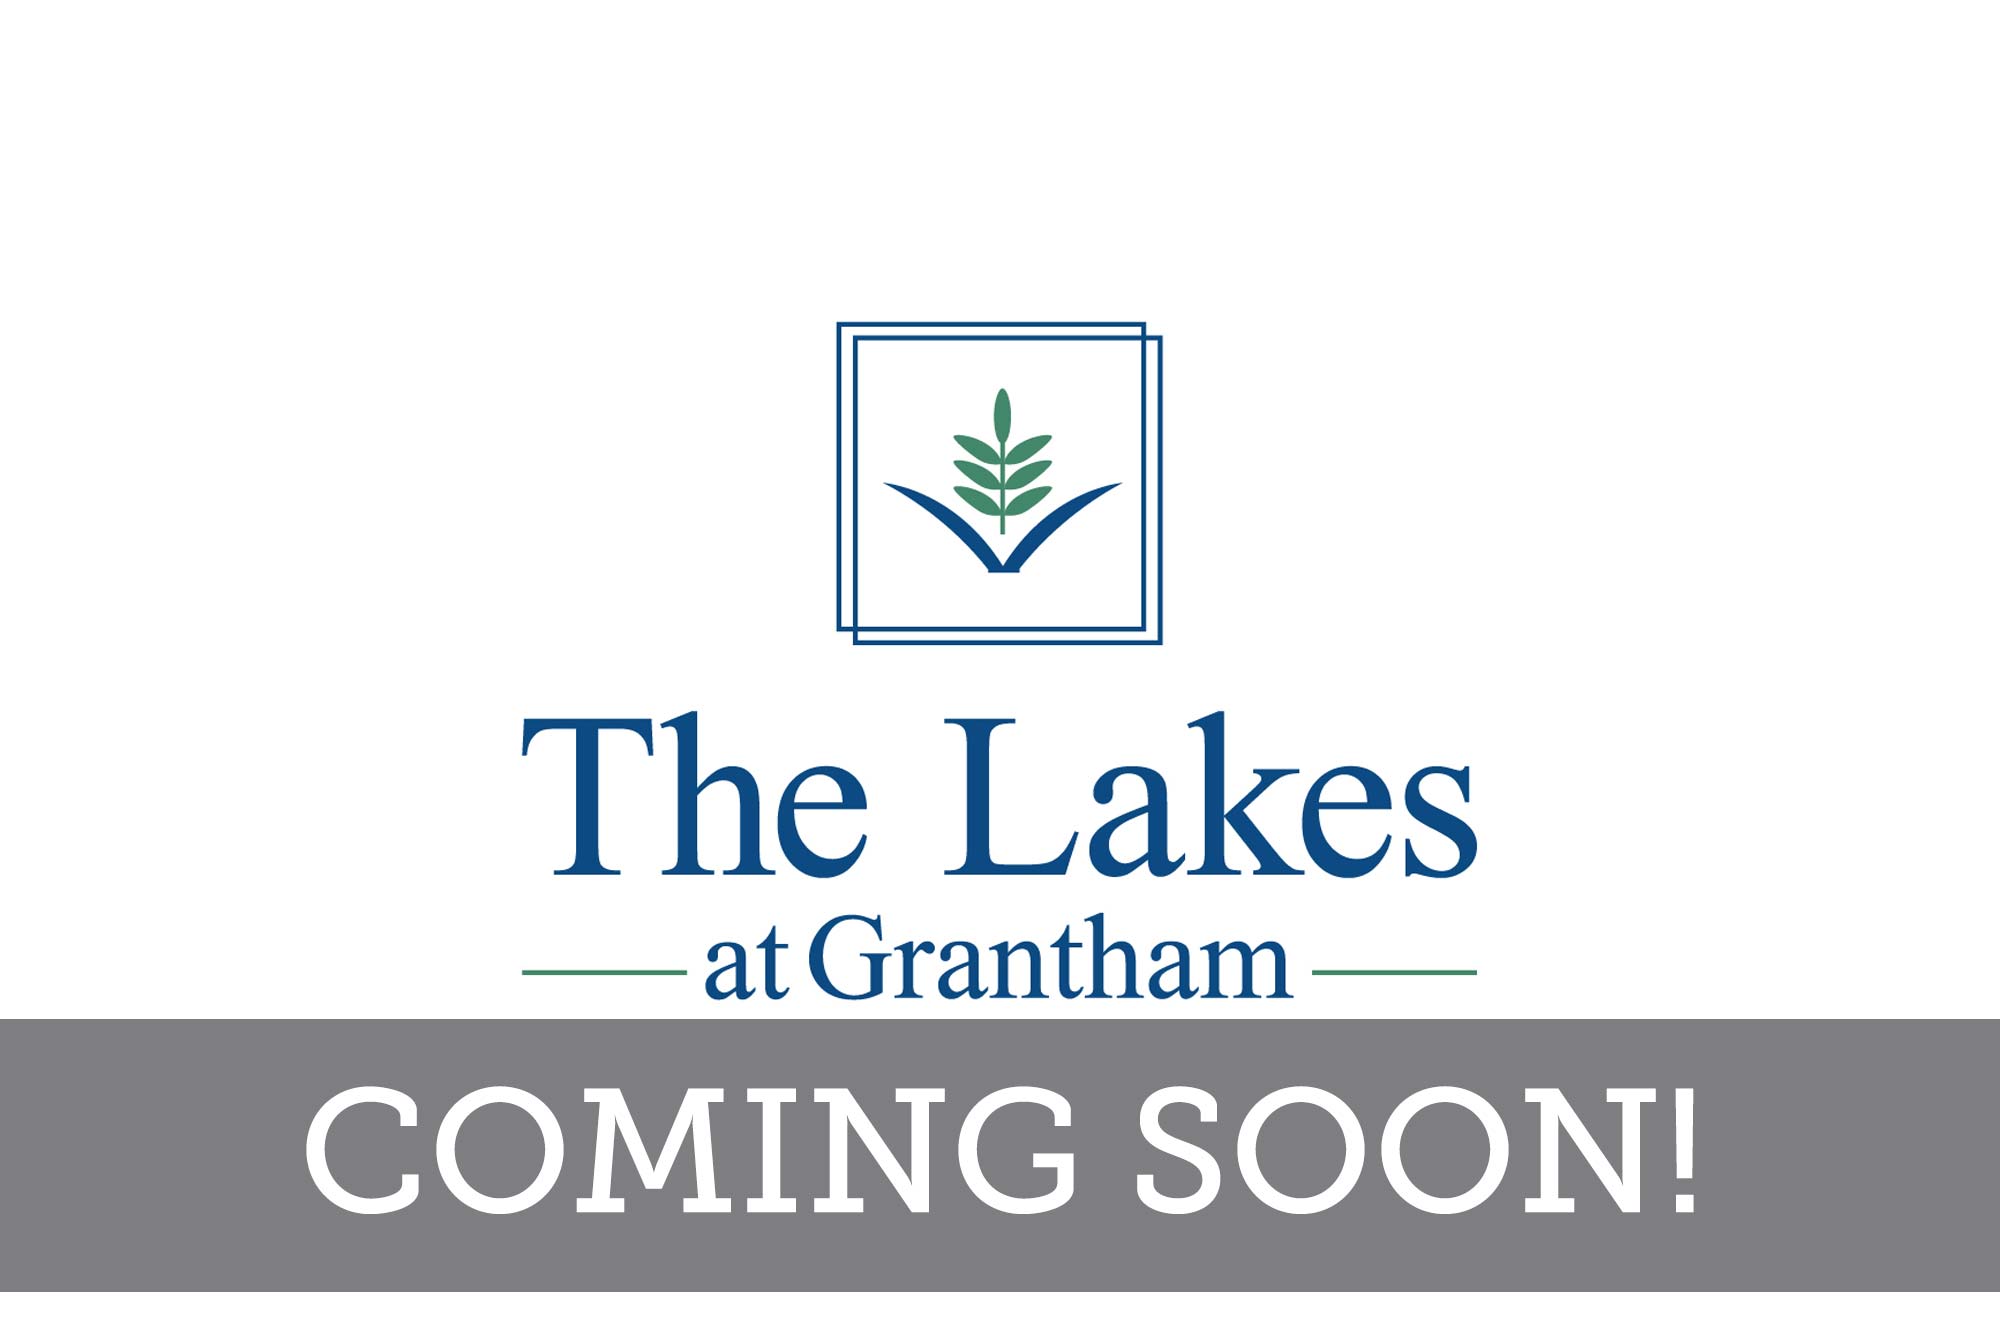 The Lakes at Grantham - Coming Soon